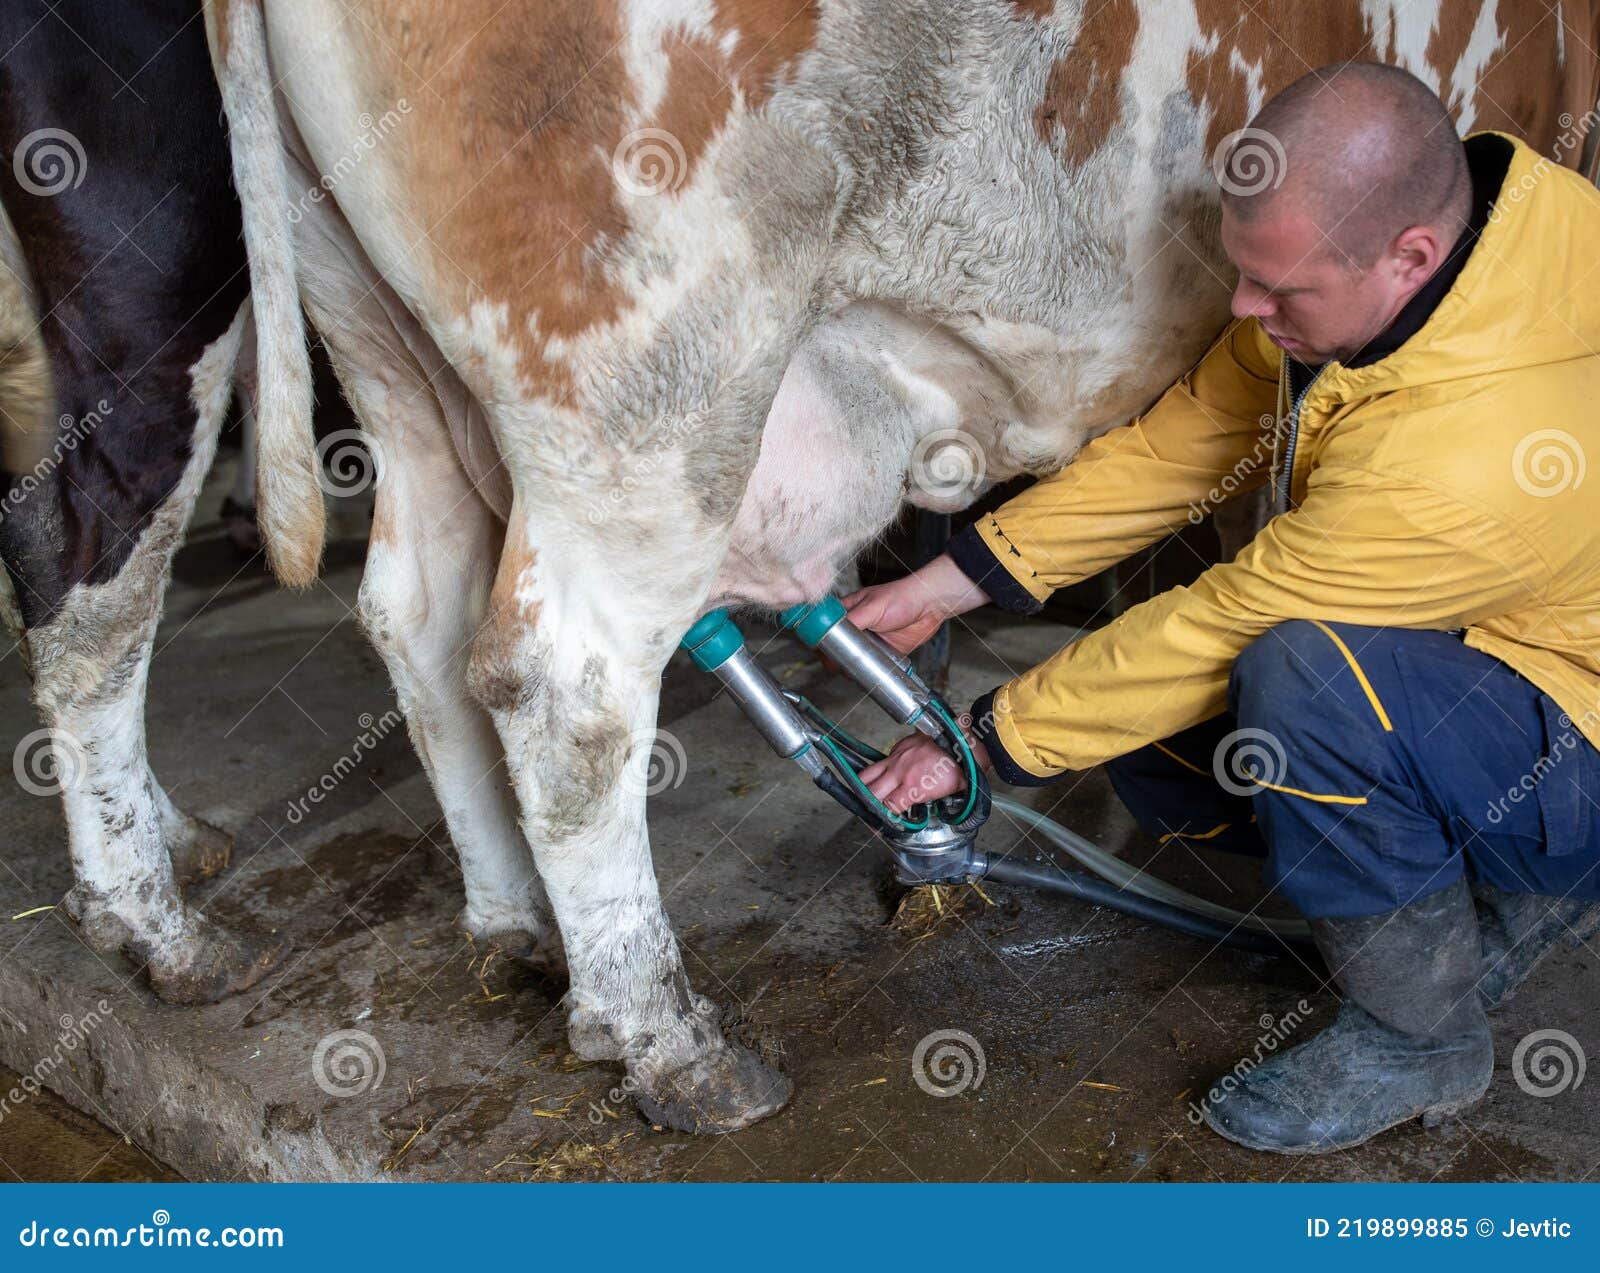 amalia pratiwi recommends man using milking machine pic